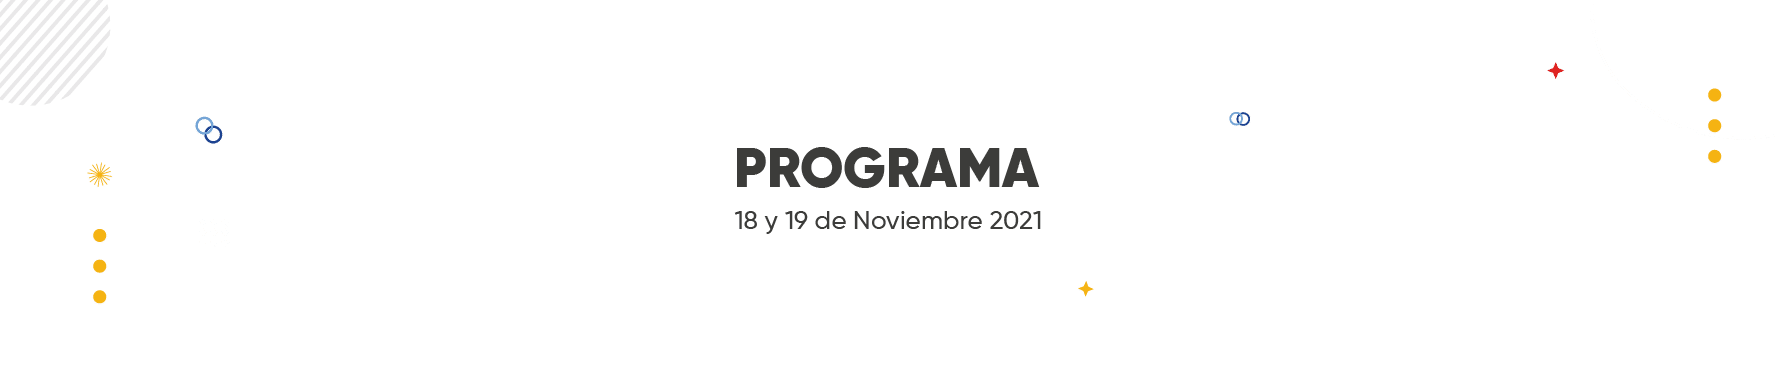 Web_programa